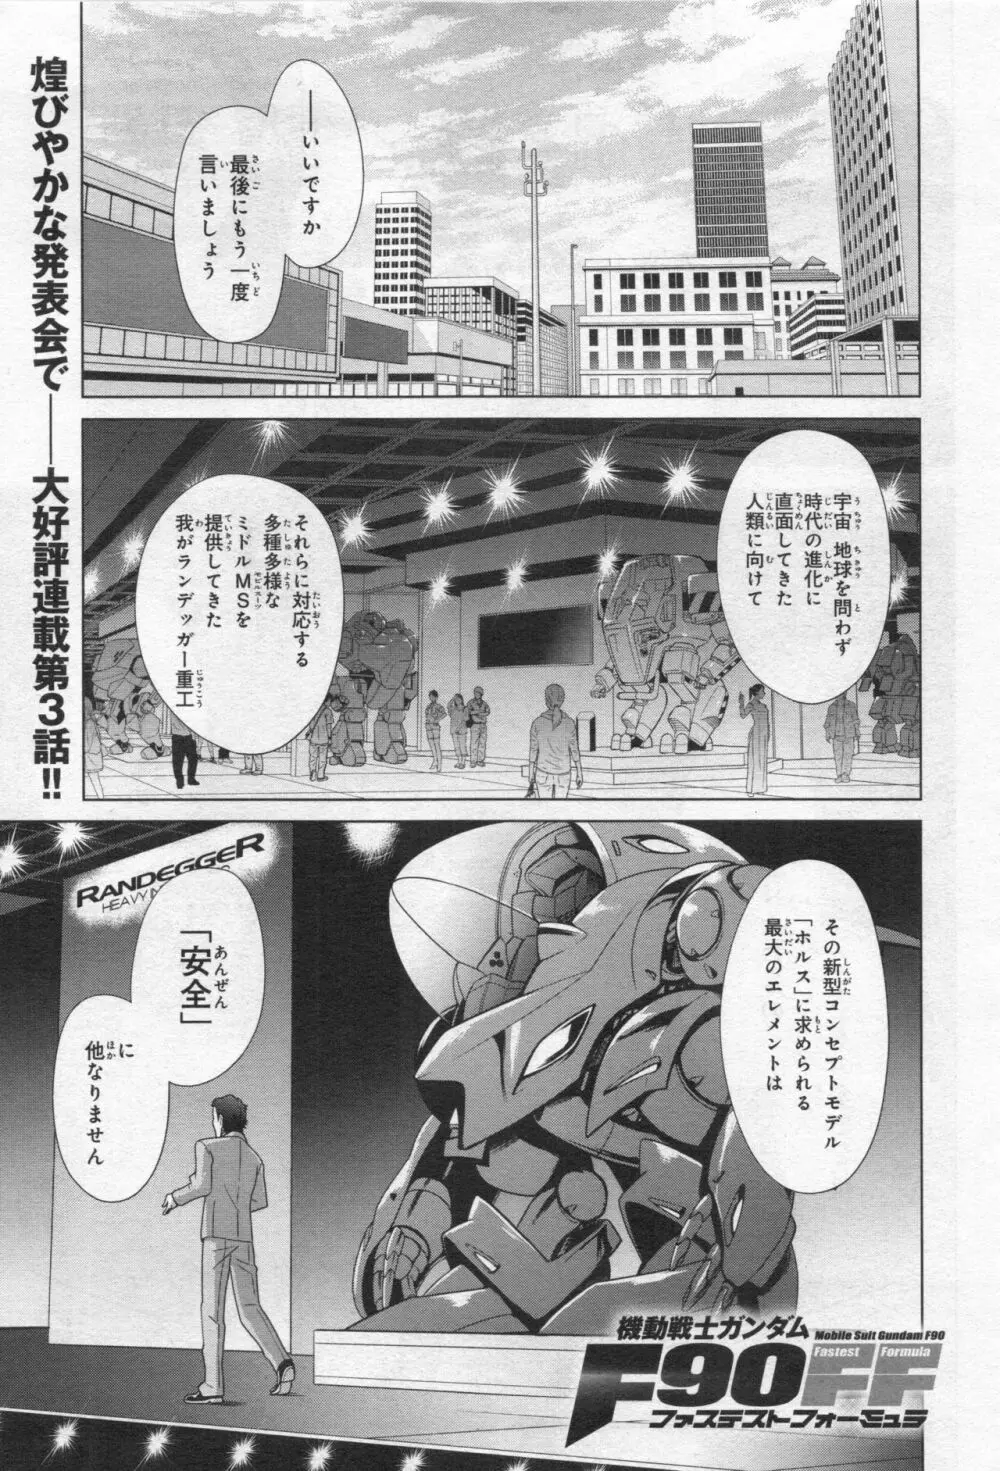 Gundam Ace – October 2019 76ページ